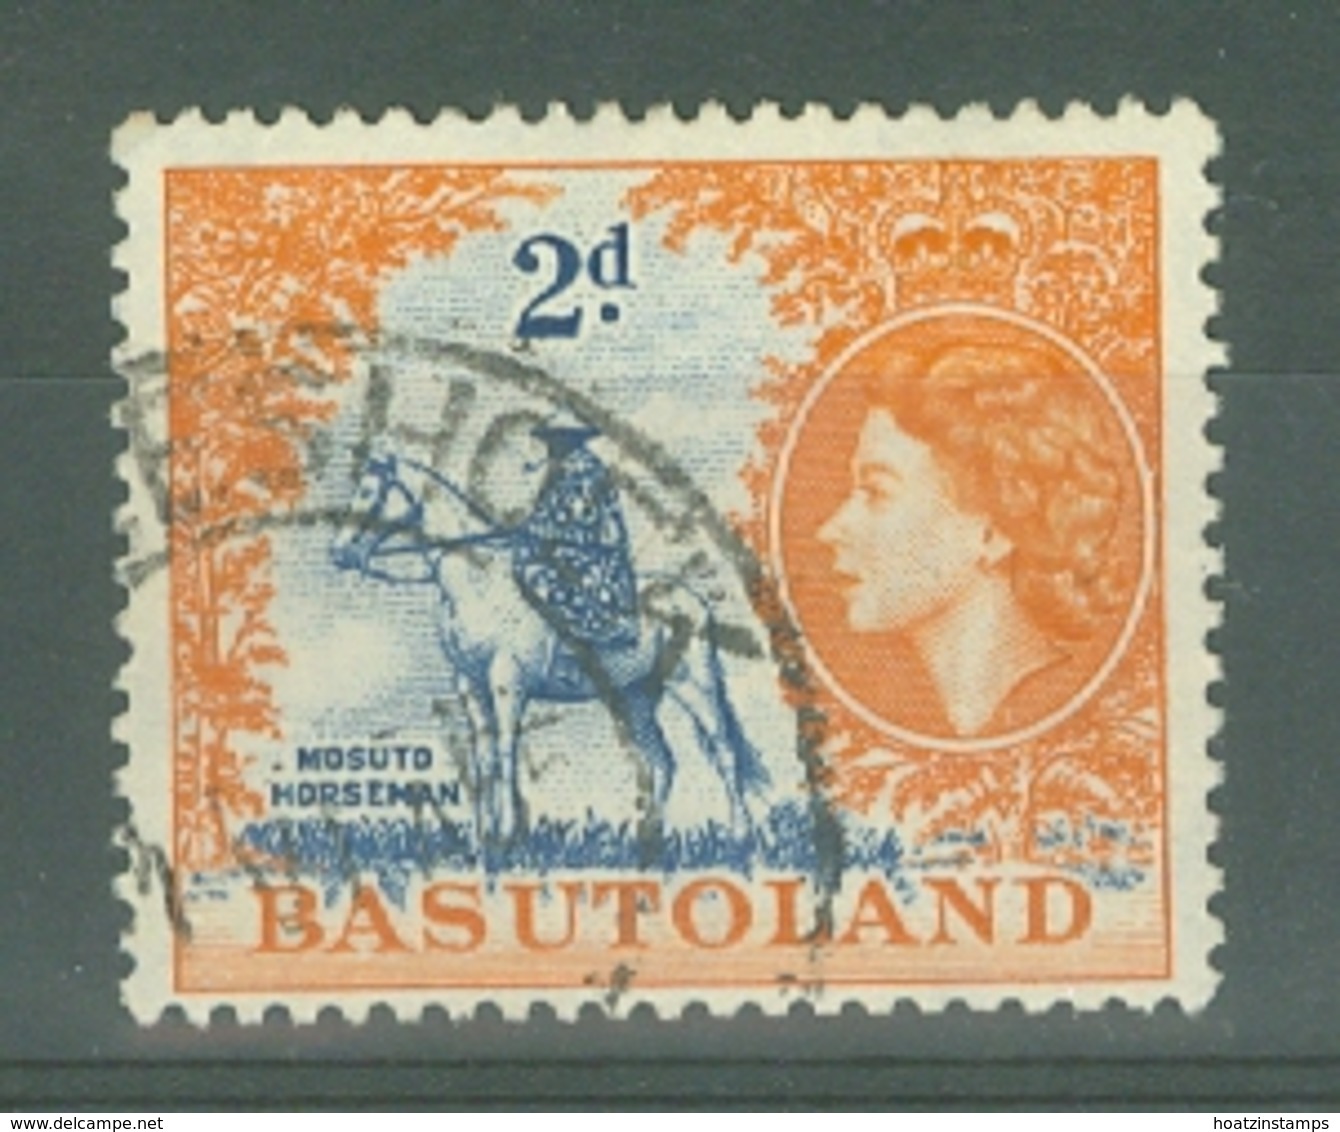 Basutoland: 1954/58   QE II - Pictorial   SG45   2d    Used - 1933-1964 Colonia Britannica